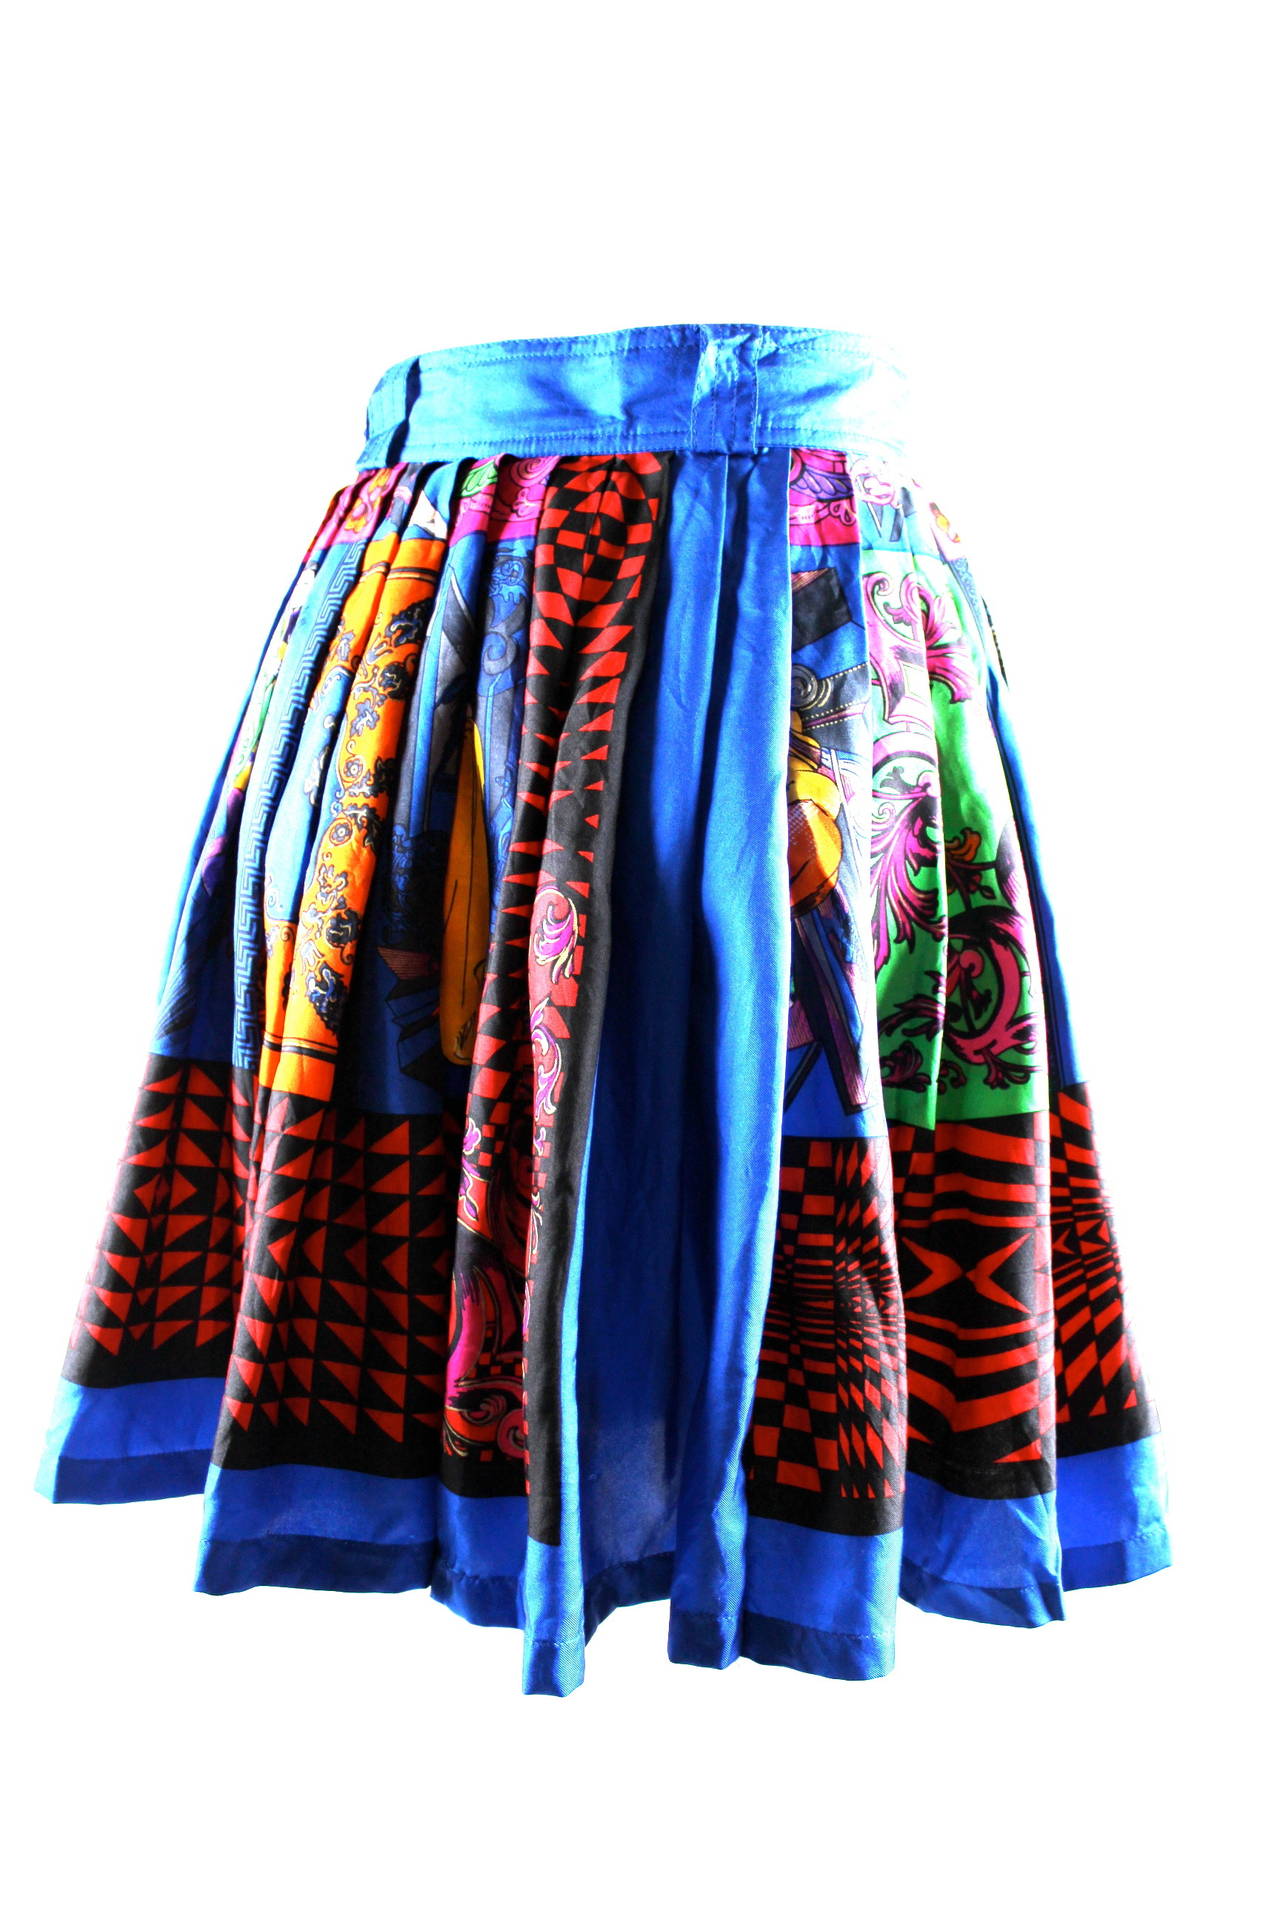 Gianni Versace 1990/1 Capriccio Silk Skirt In Good Condition For Sale In Bath, GB